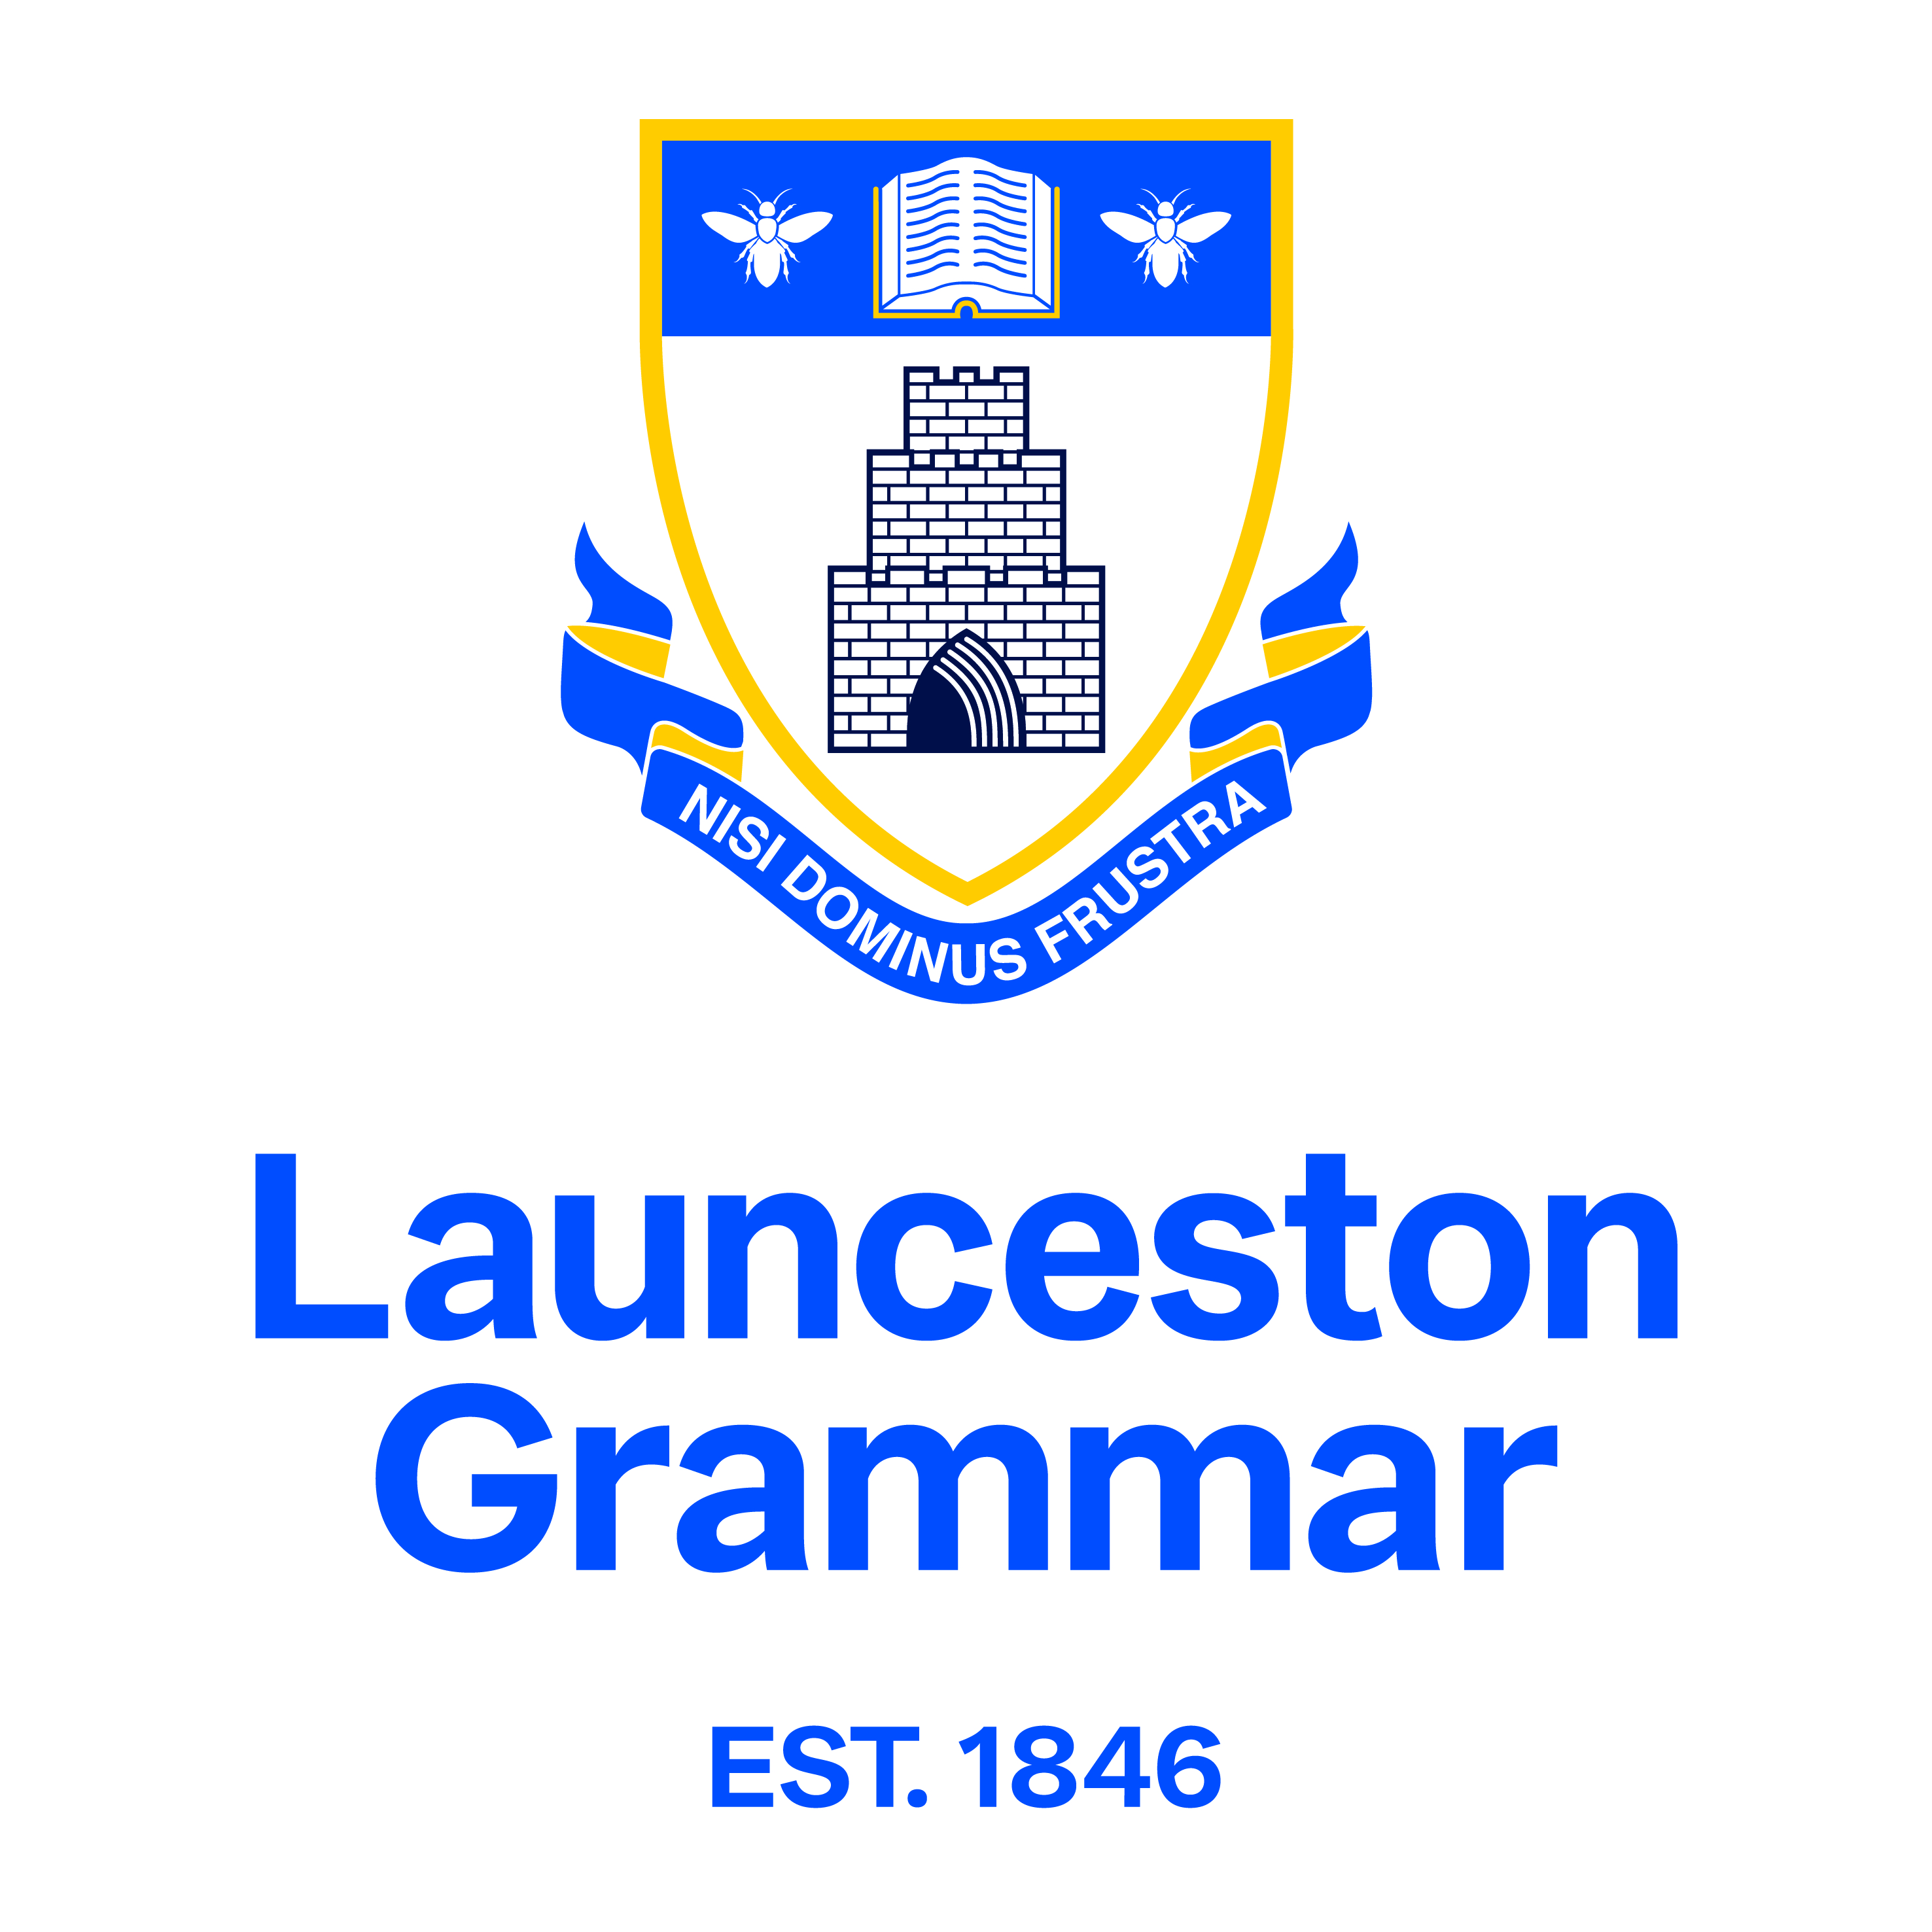 Launceston Grammar